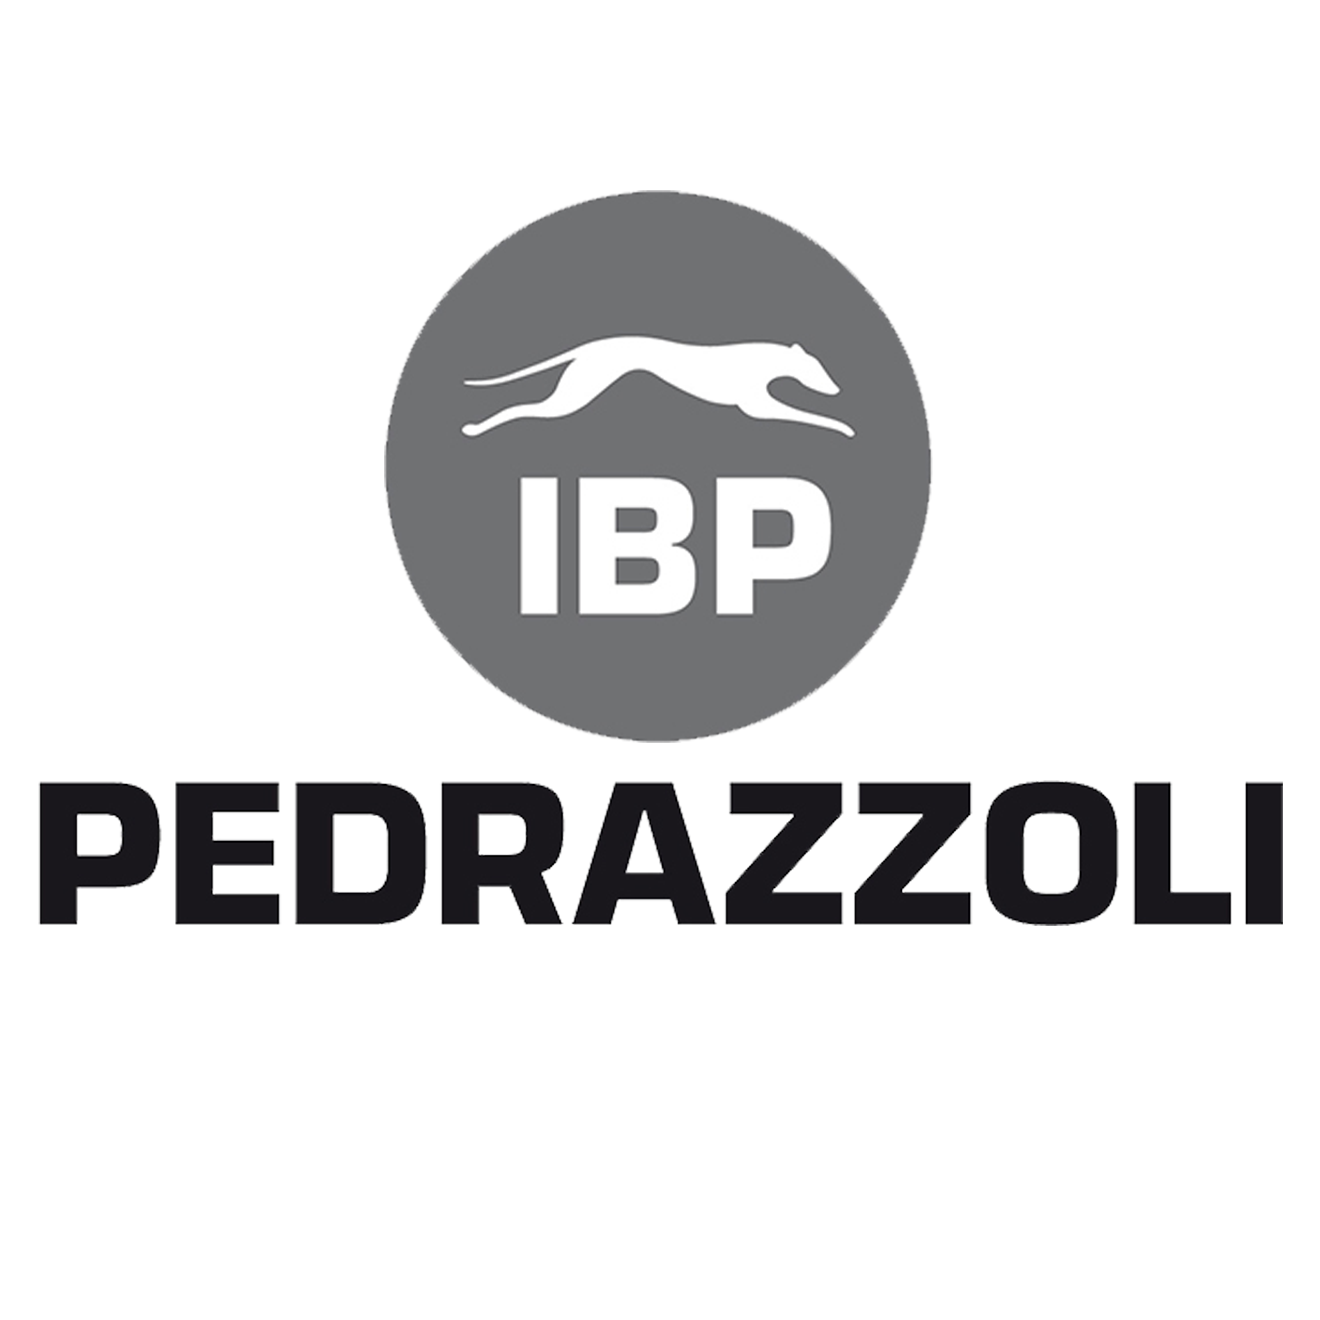 Pedrazzoli Bandsaws logo